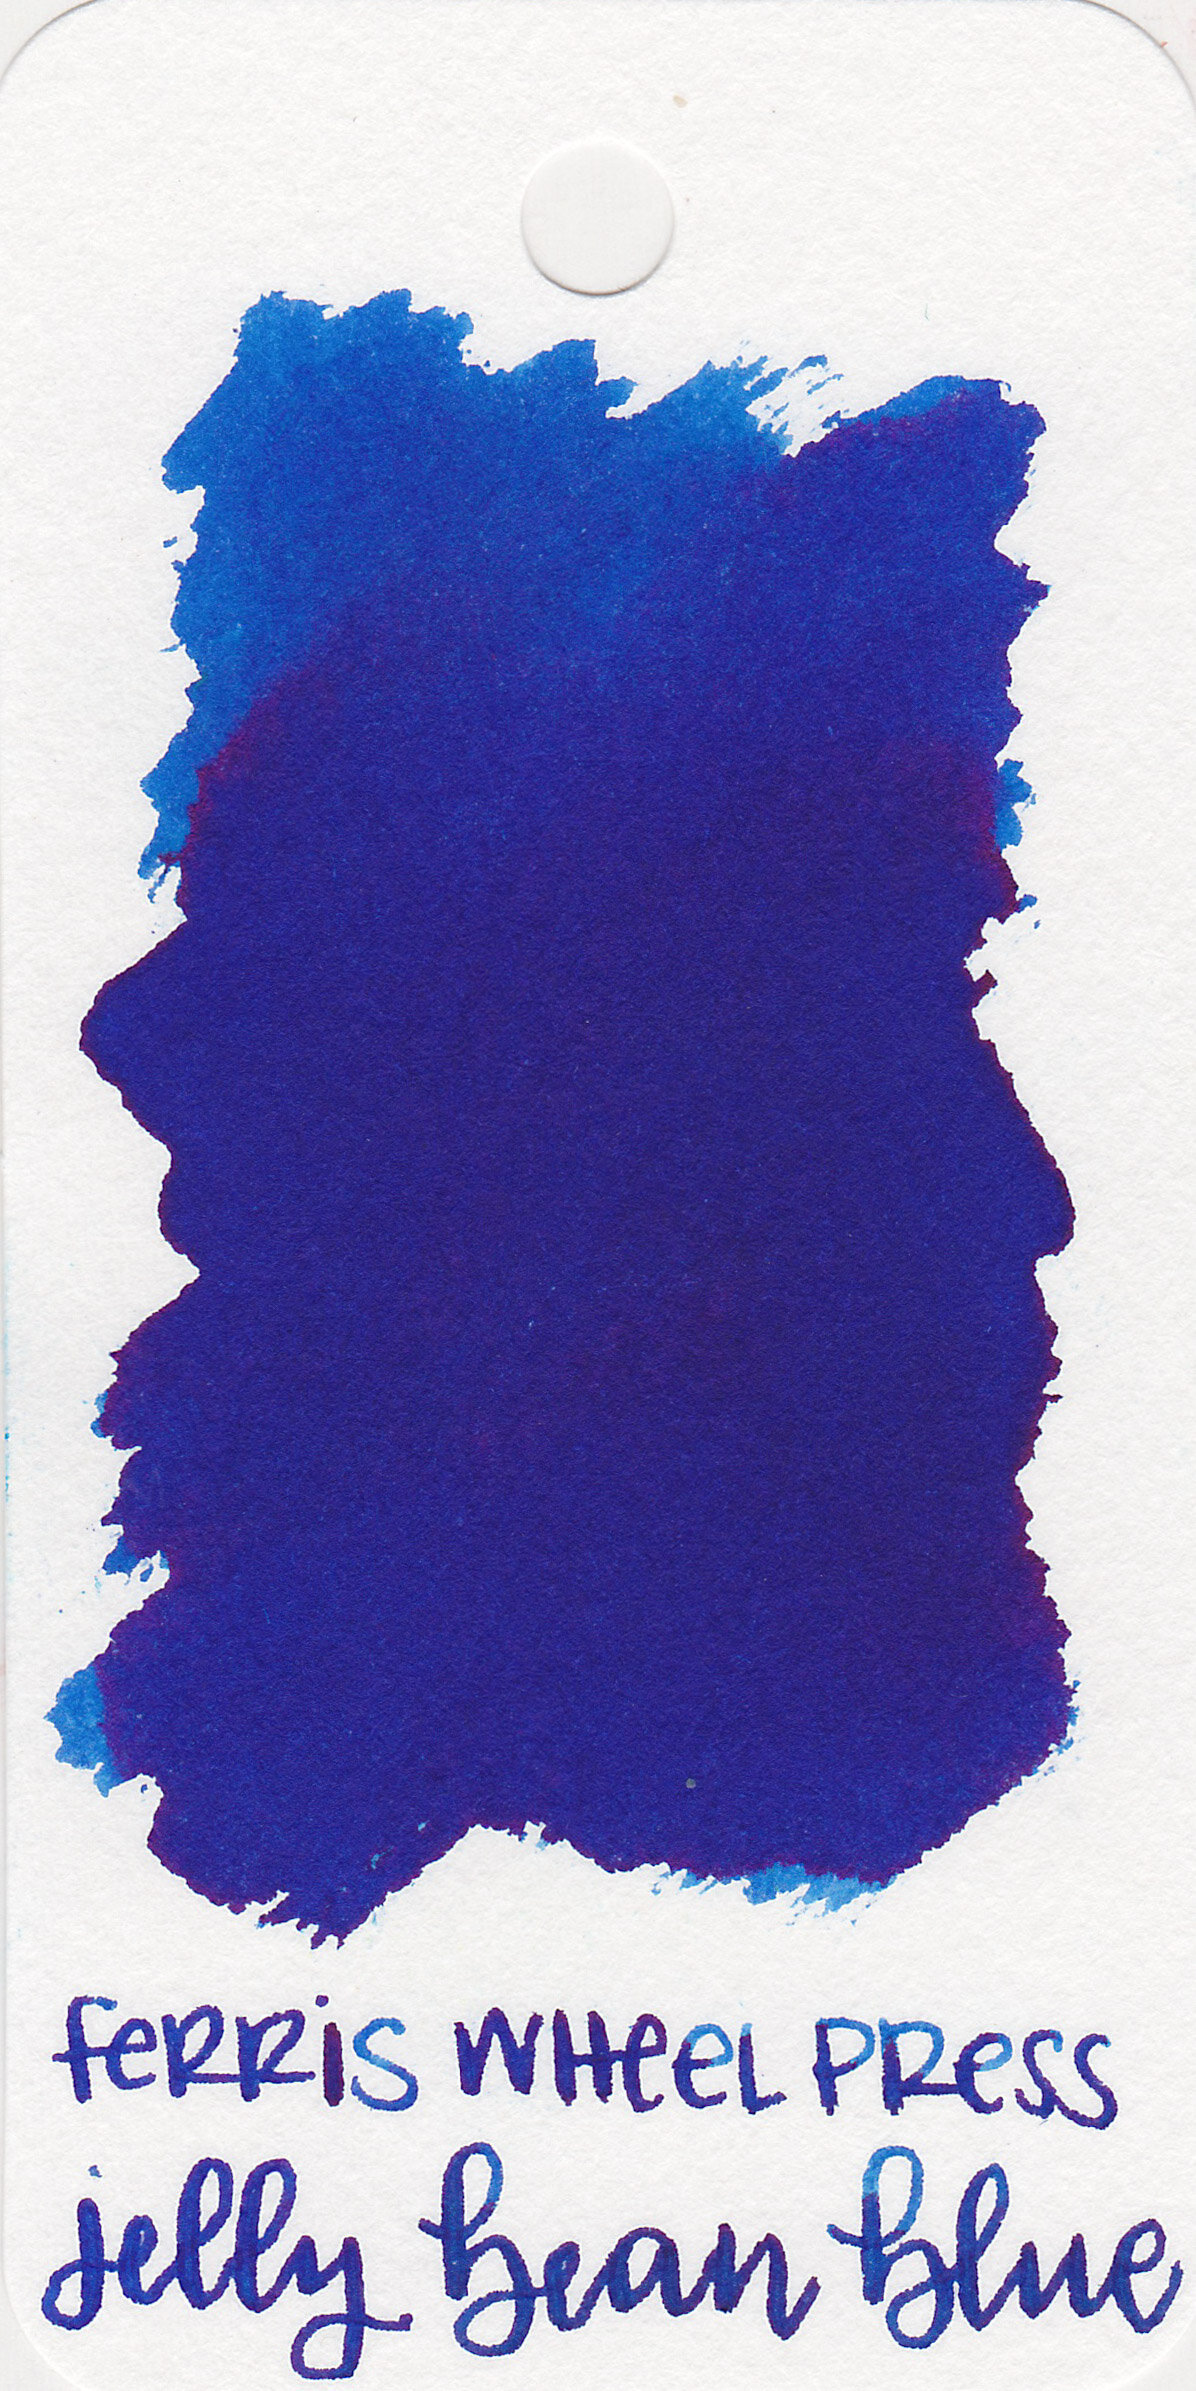 fwp-jelly-bean-blue-1.jpg